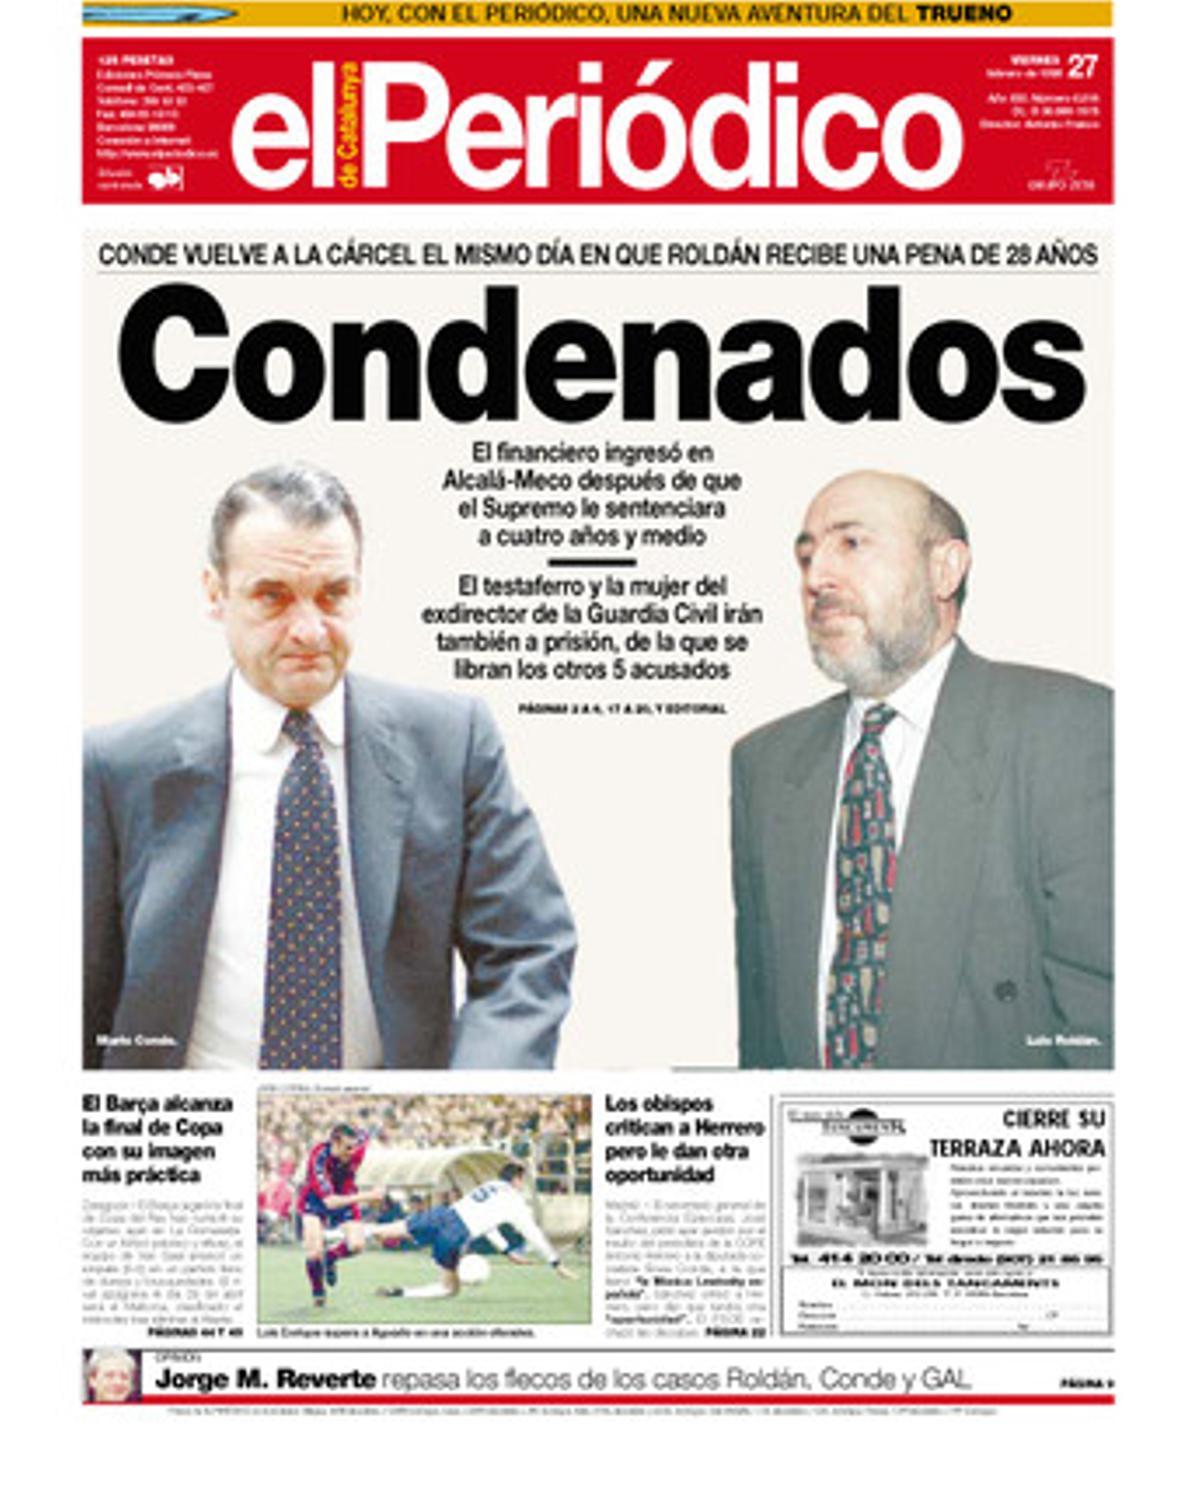 Condemnats. Mario Conde torna a la presó el mateix dia que Luis Roldán rep una pena de 28 anys. Portada publicada el 27 de febrer de 1998.